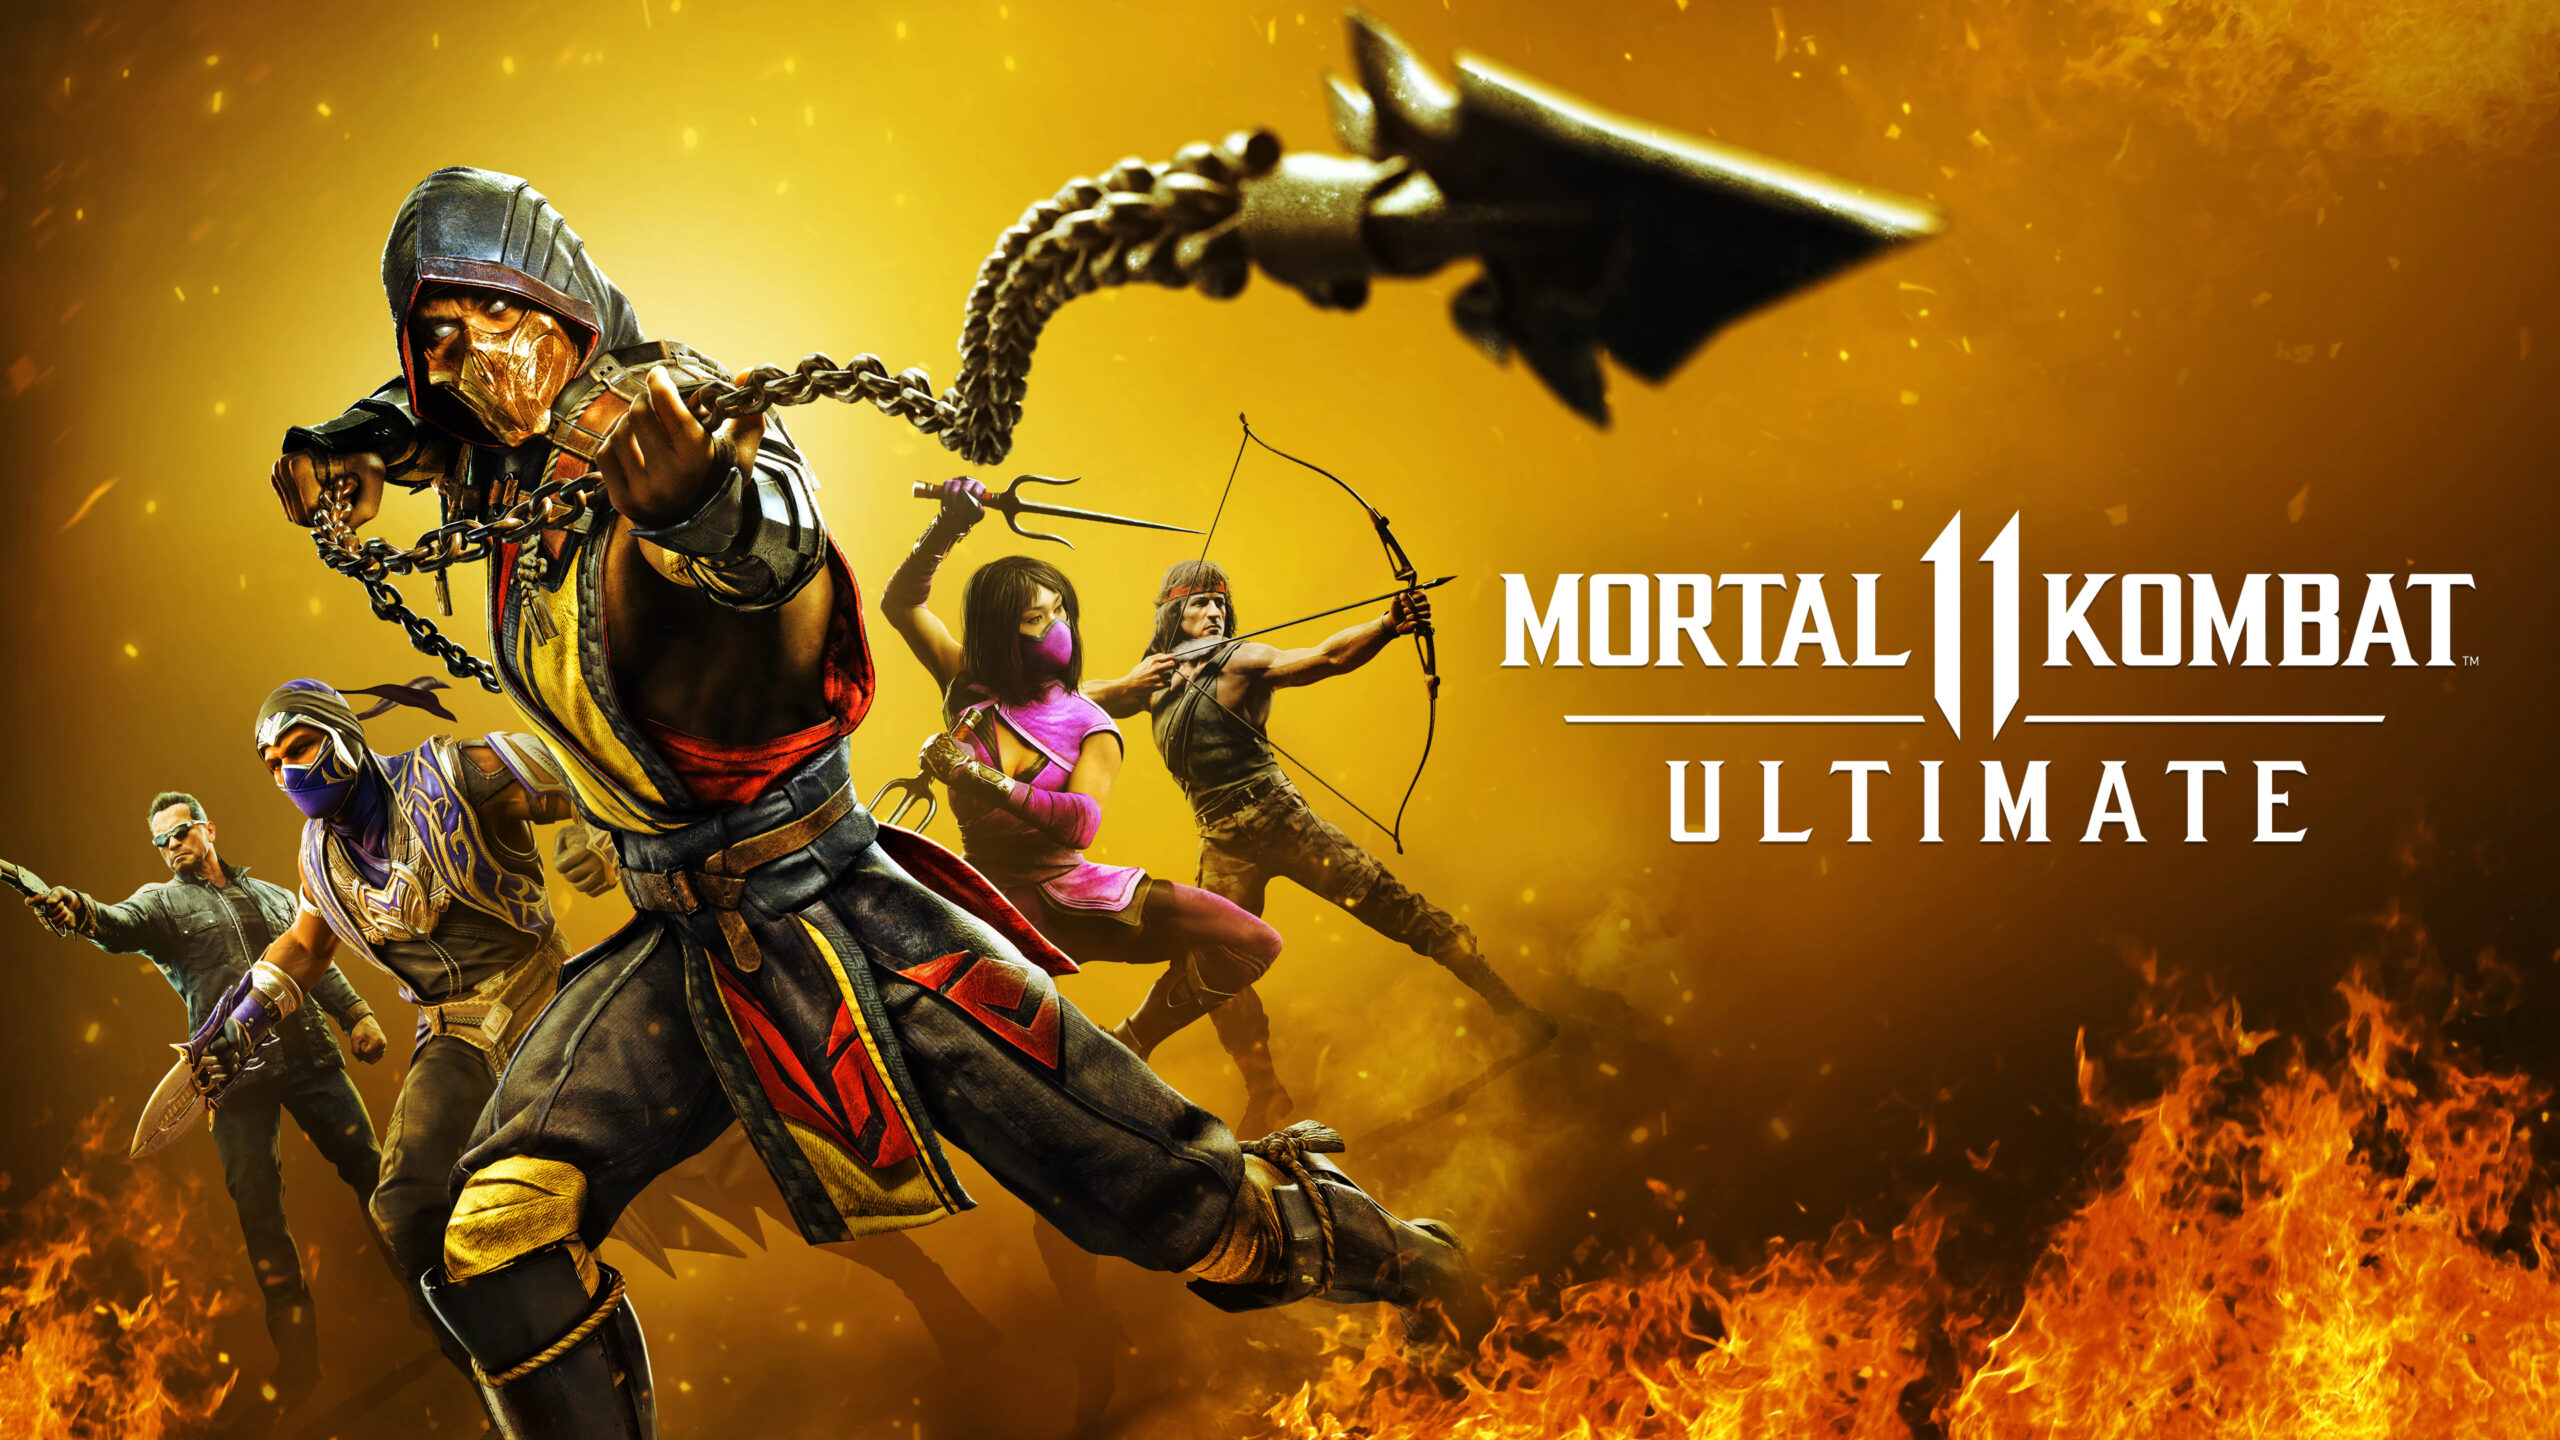 Mortal Kombat 12 Creator Teases Something Fun For Later This Week